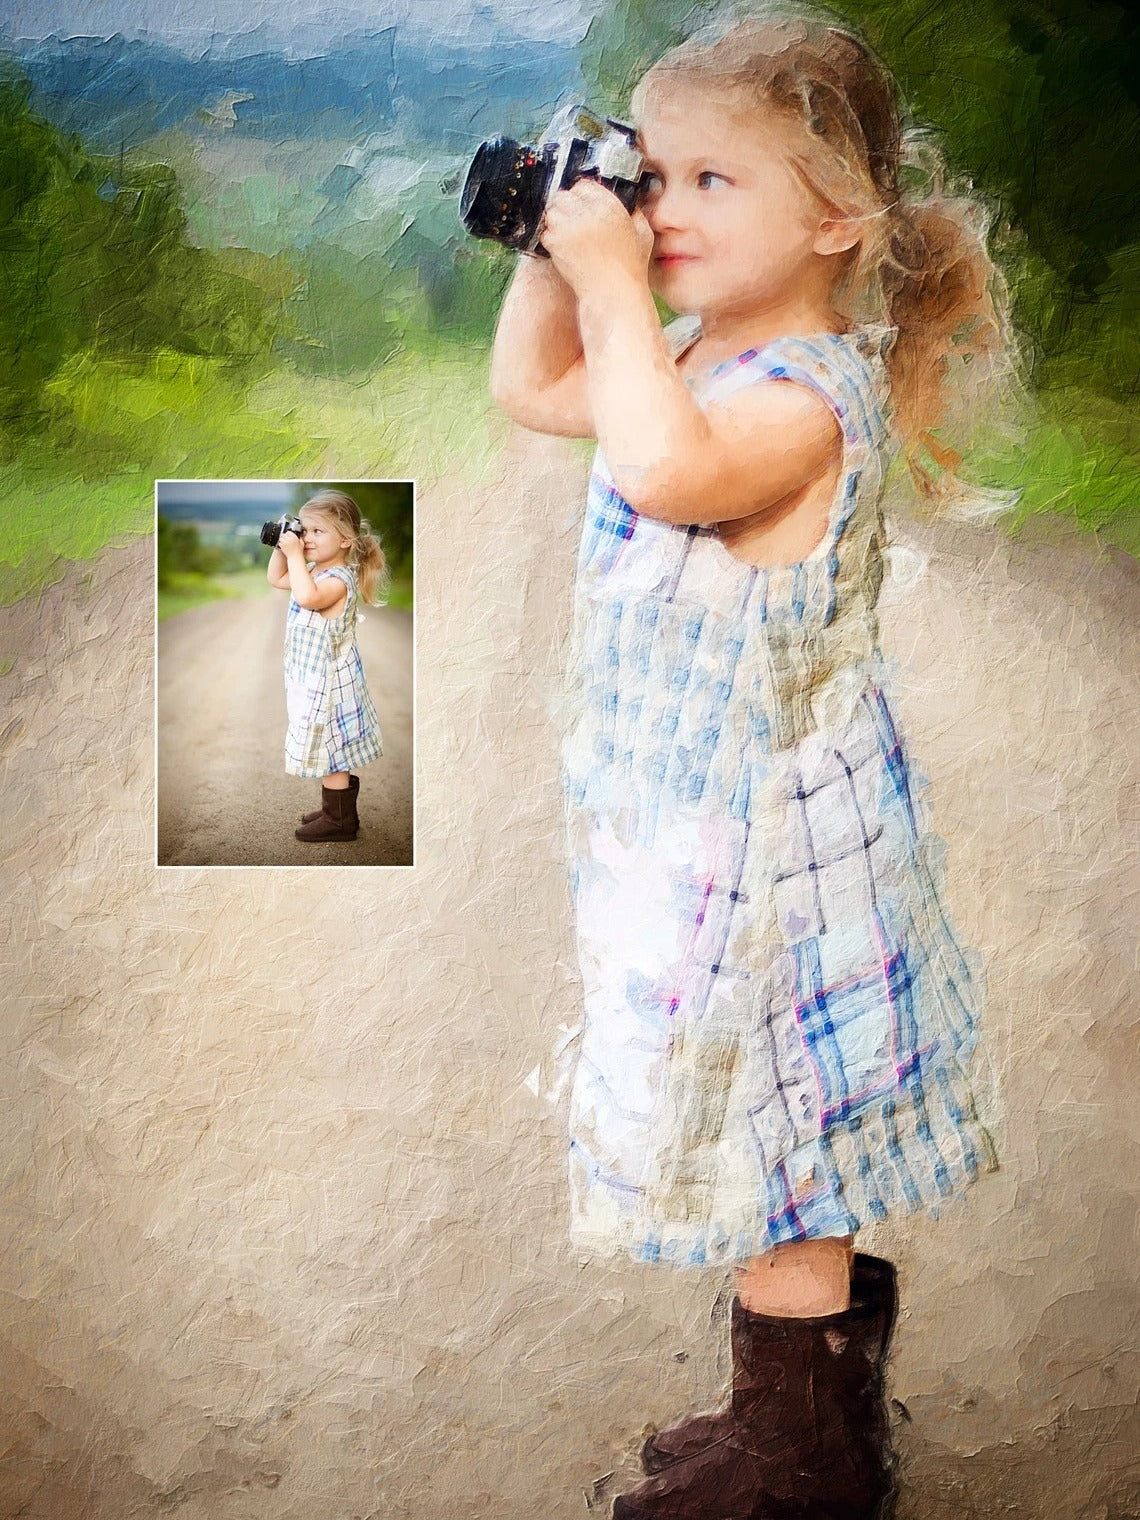 Through the Lens: Capturing Childhood Wonder